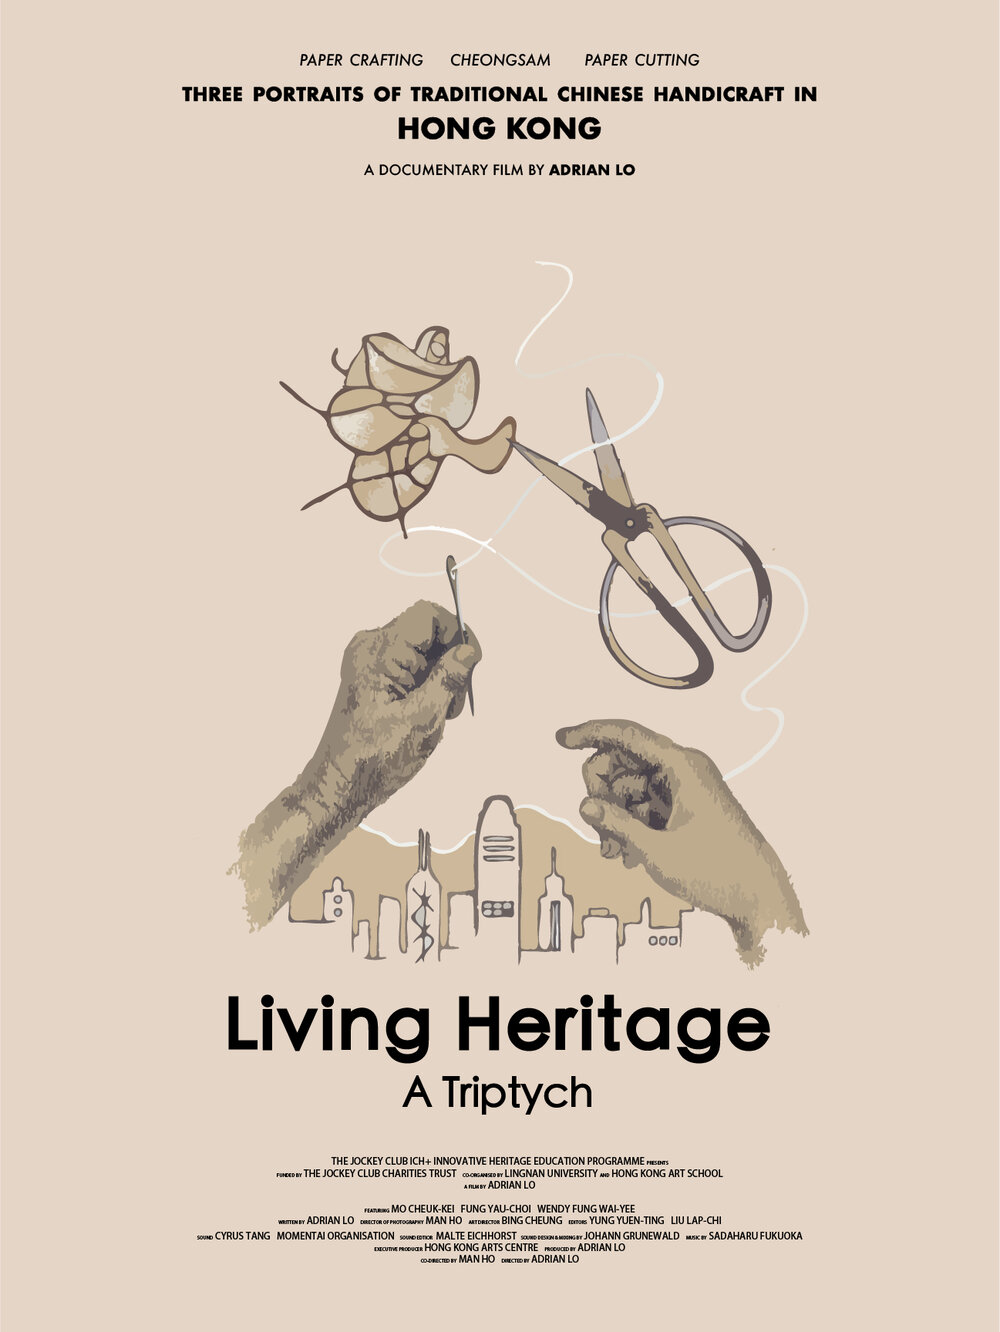 LivingHeritage_Poster_01_Triptych.jpg